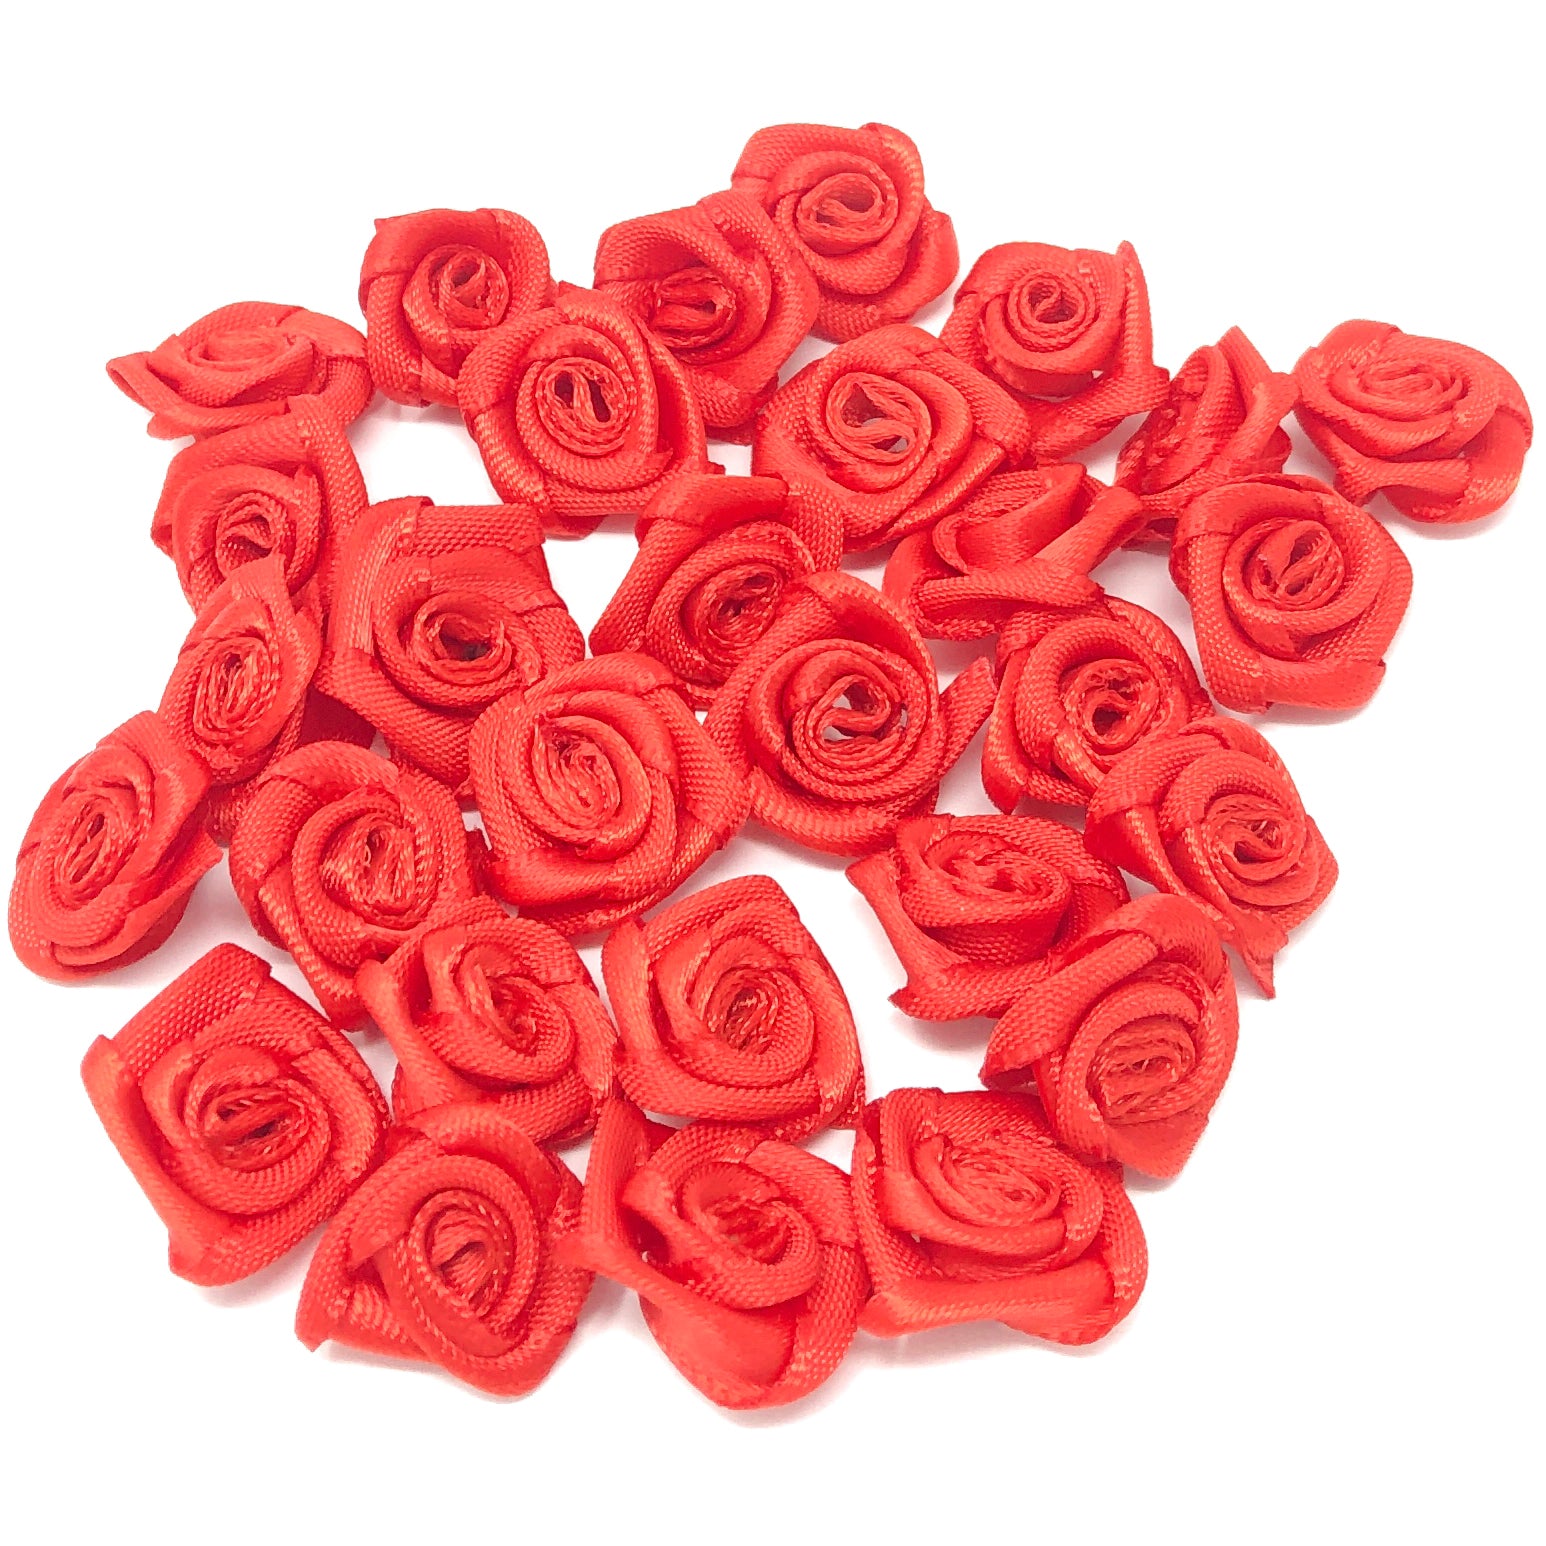 Red 15mm Miniature Satin Ribbon Roses